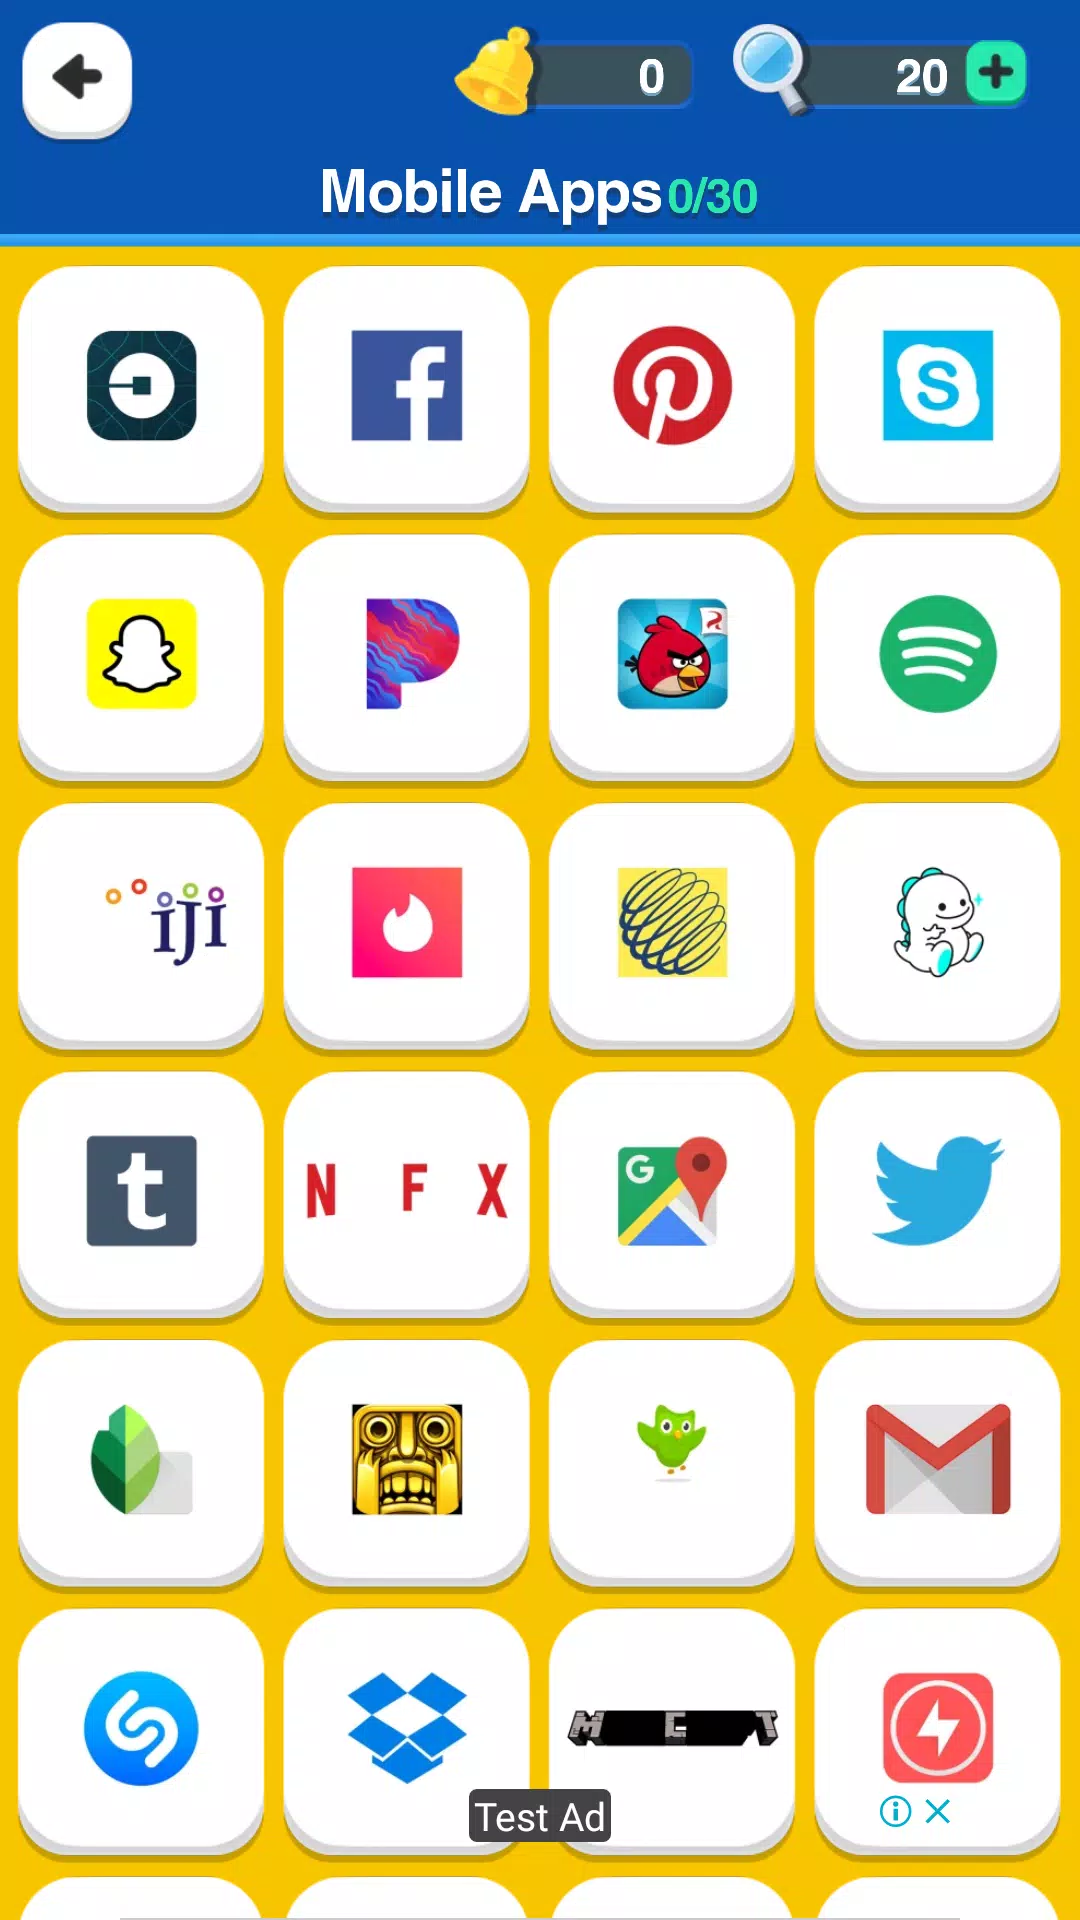 Quiz Logo Games for Mobile Phones